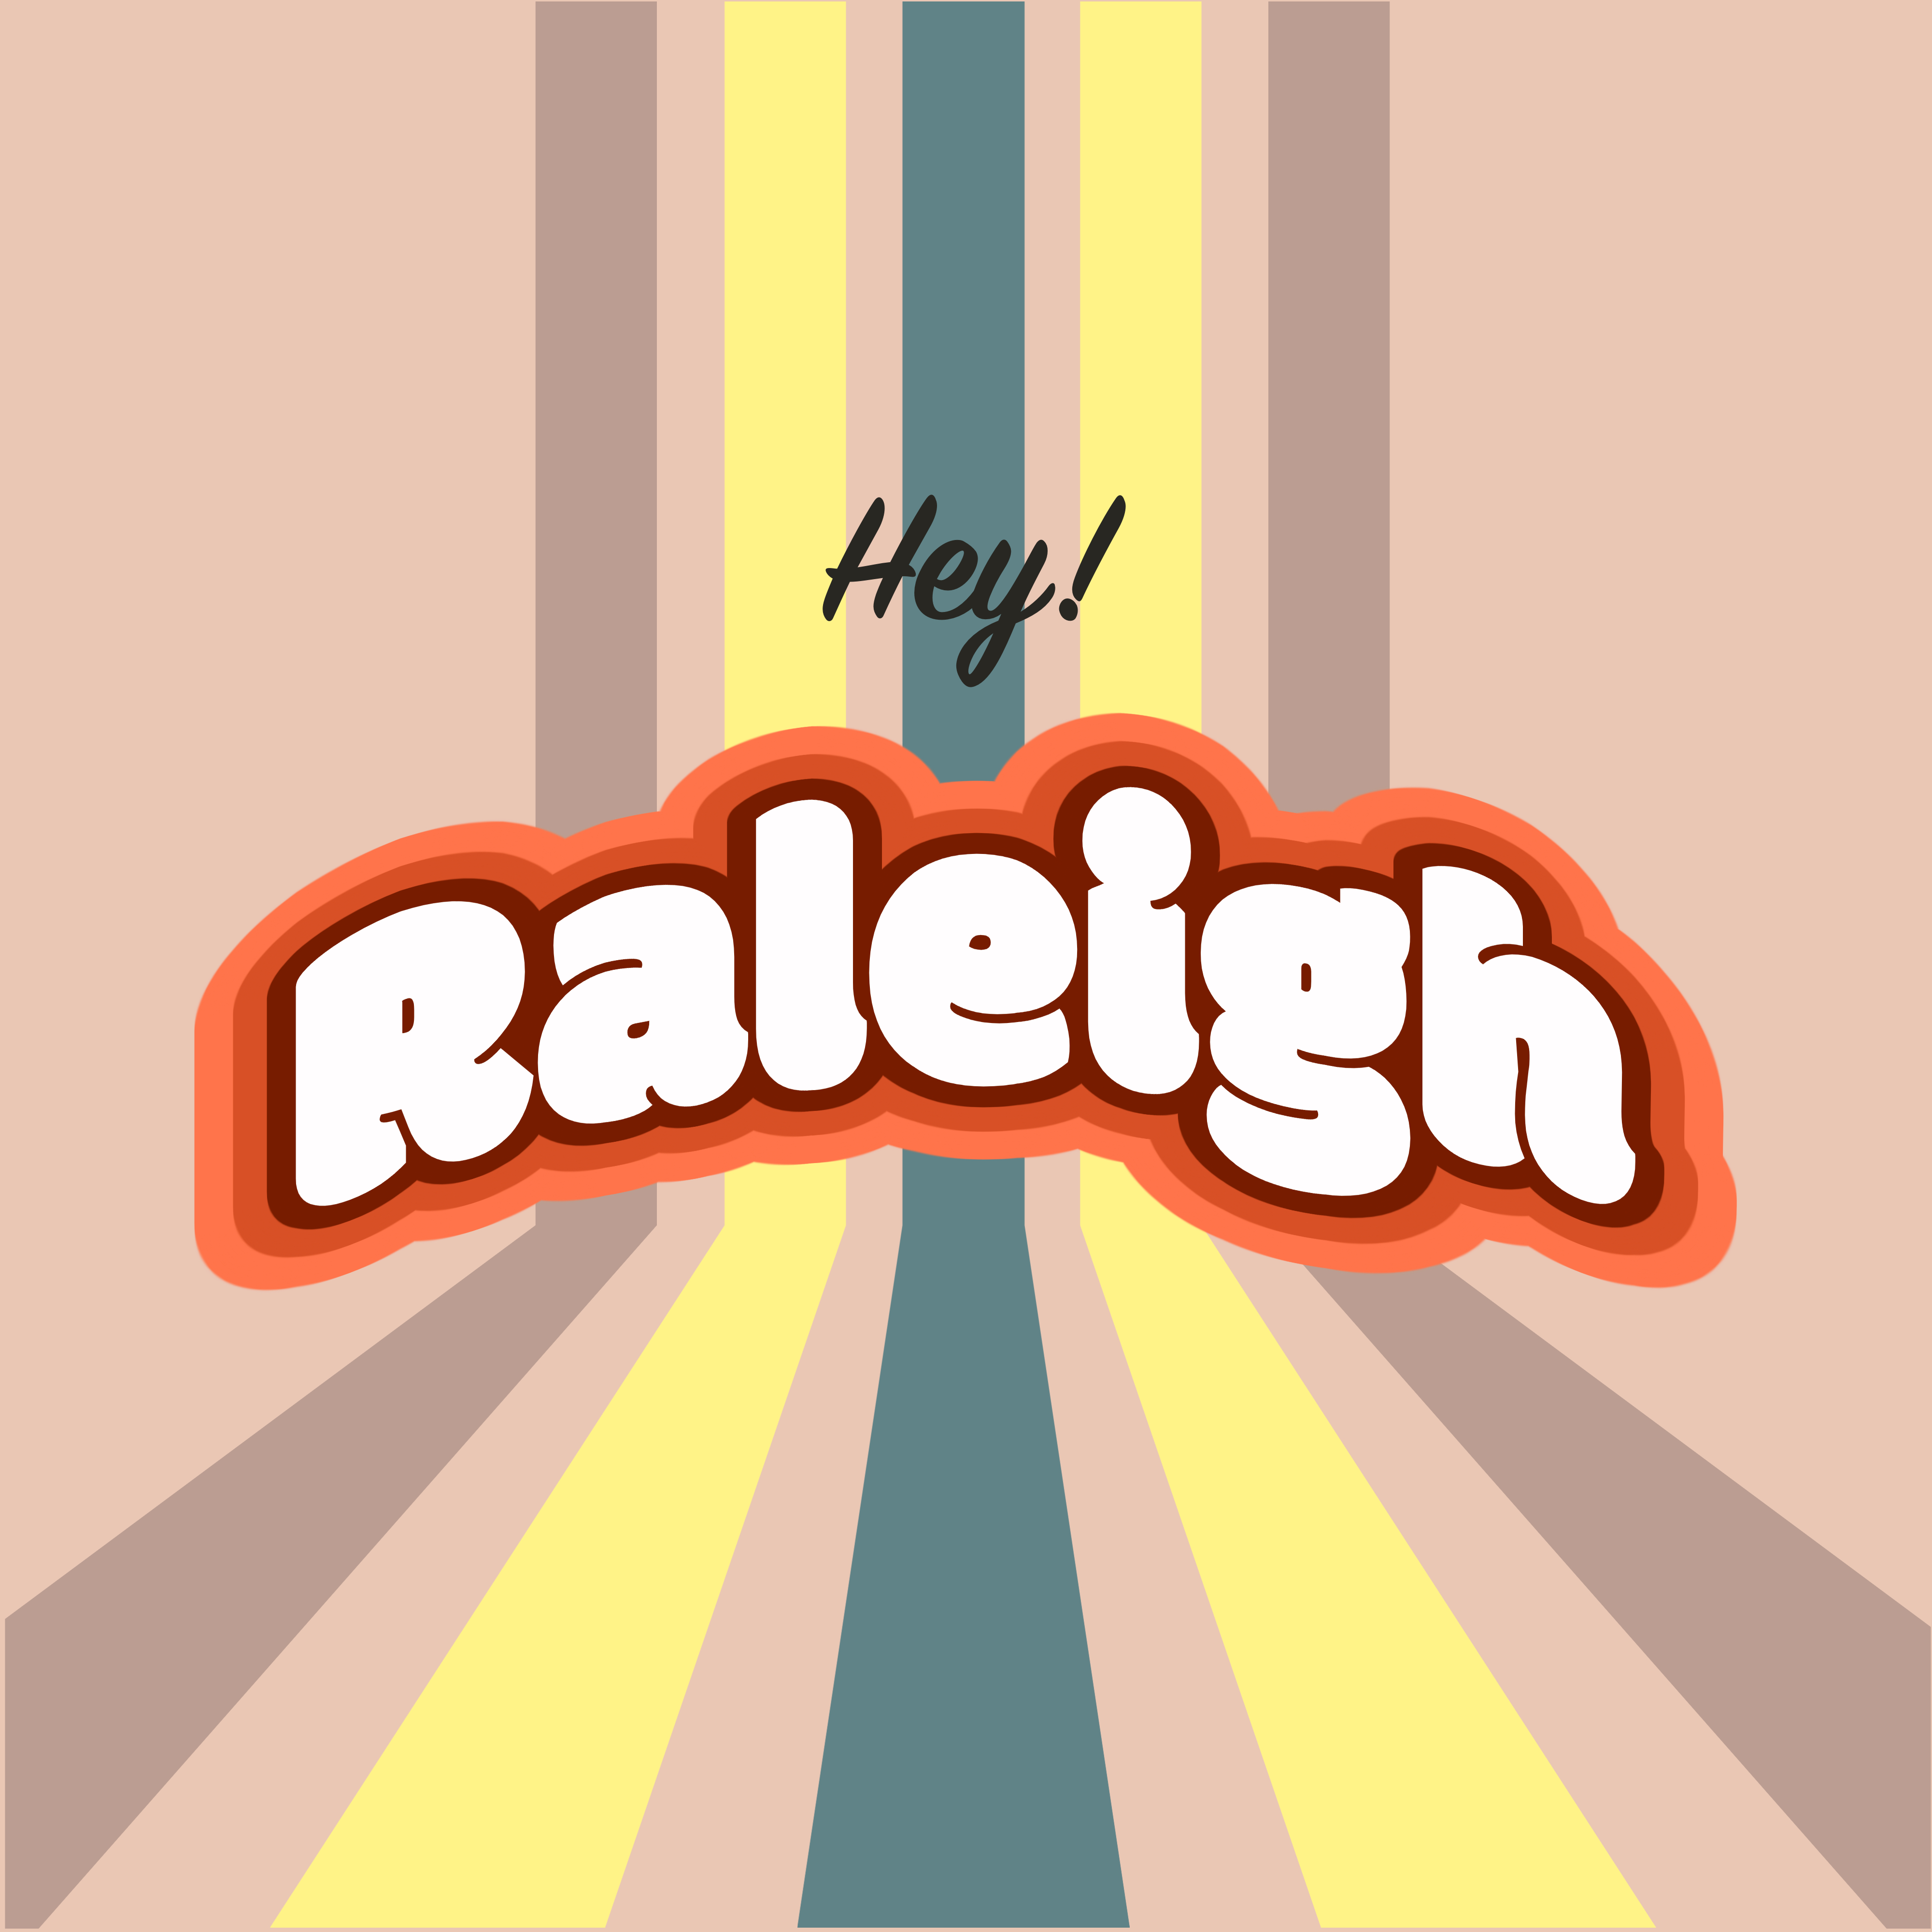 Hey! Raleigh